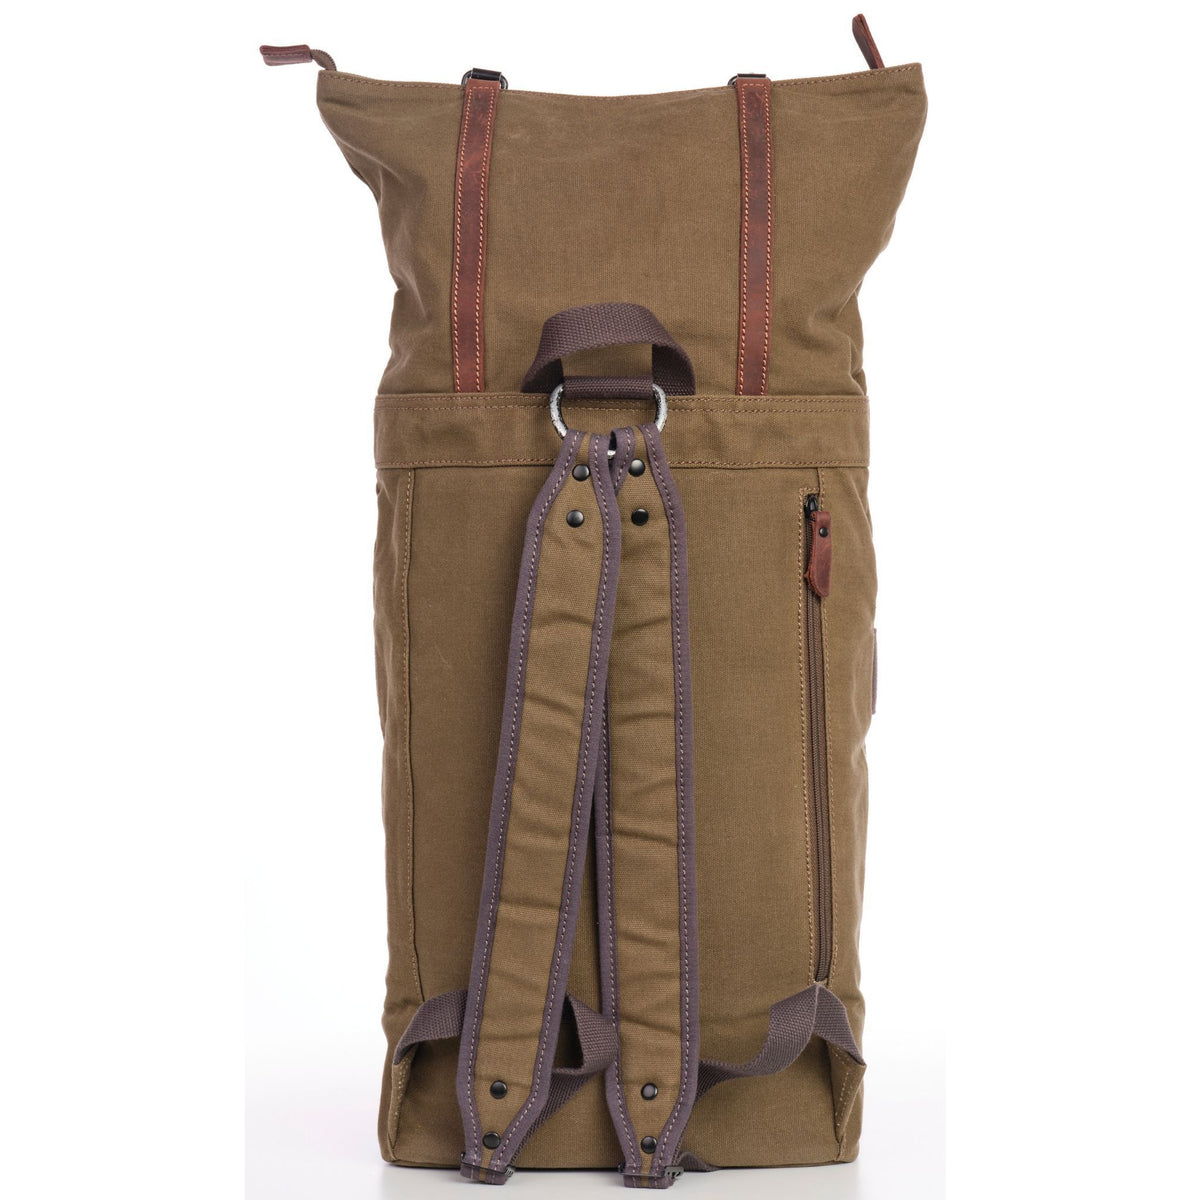 Rucksack - Sleepy Panda diaper bag backpack stroller straps changing pad